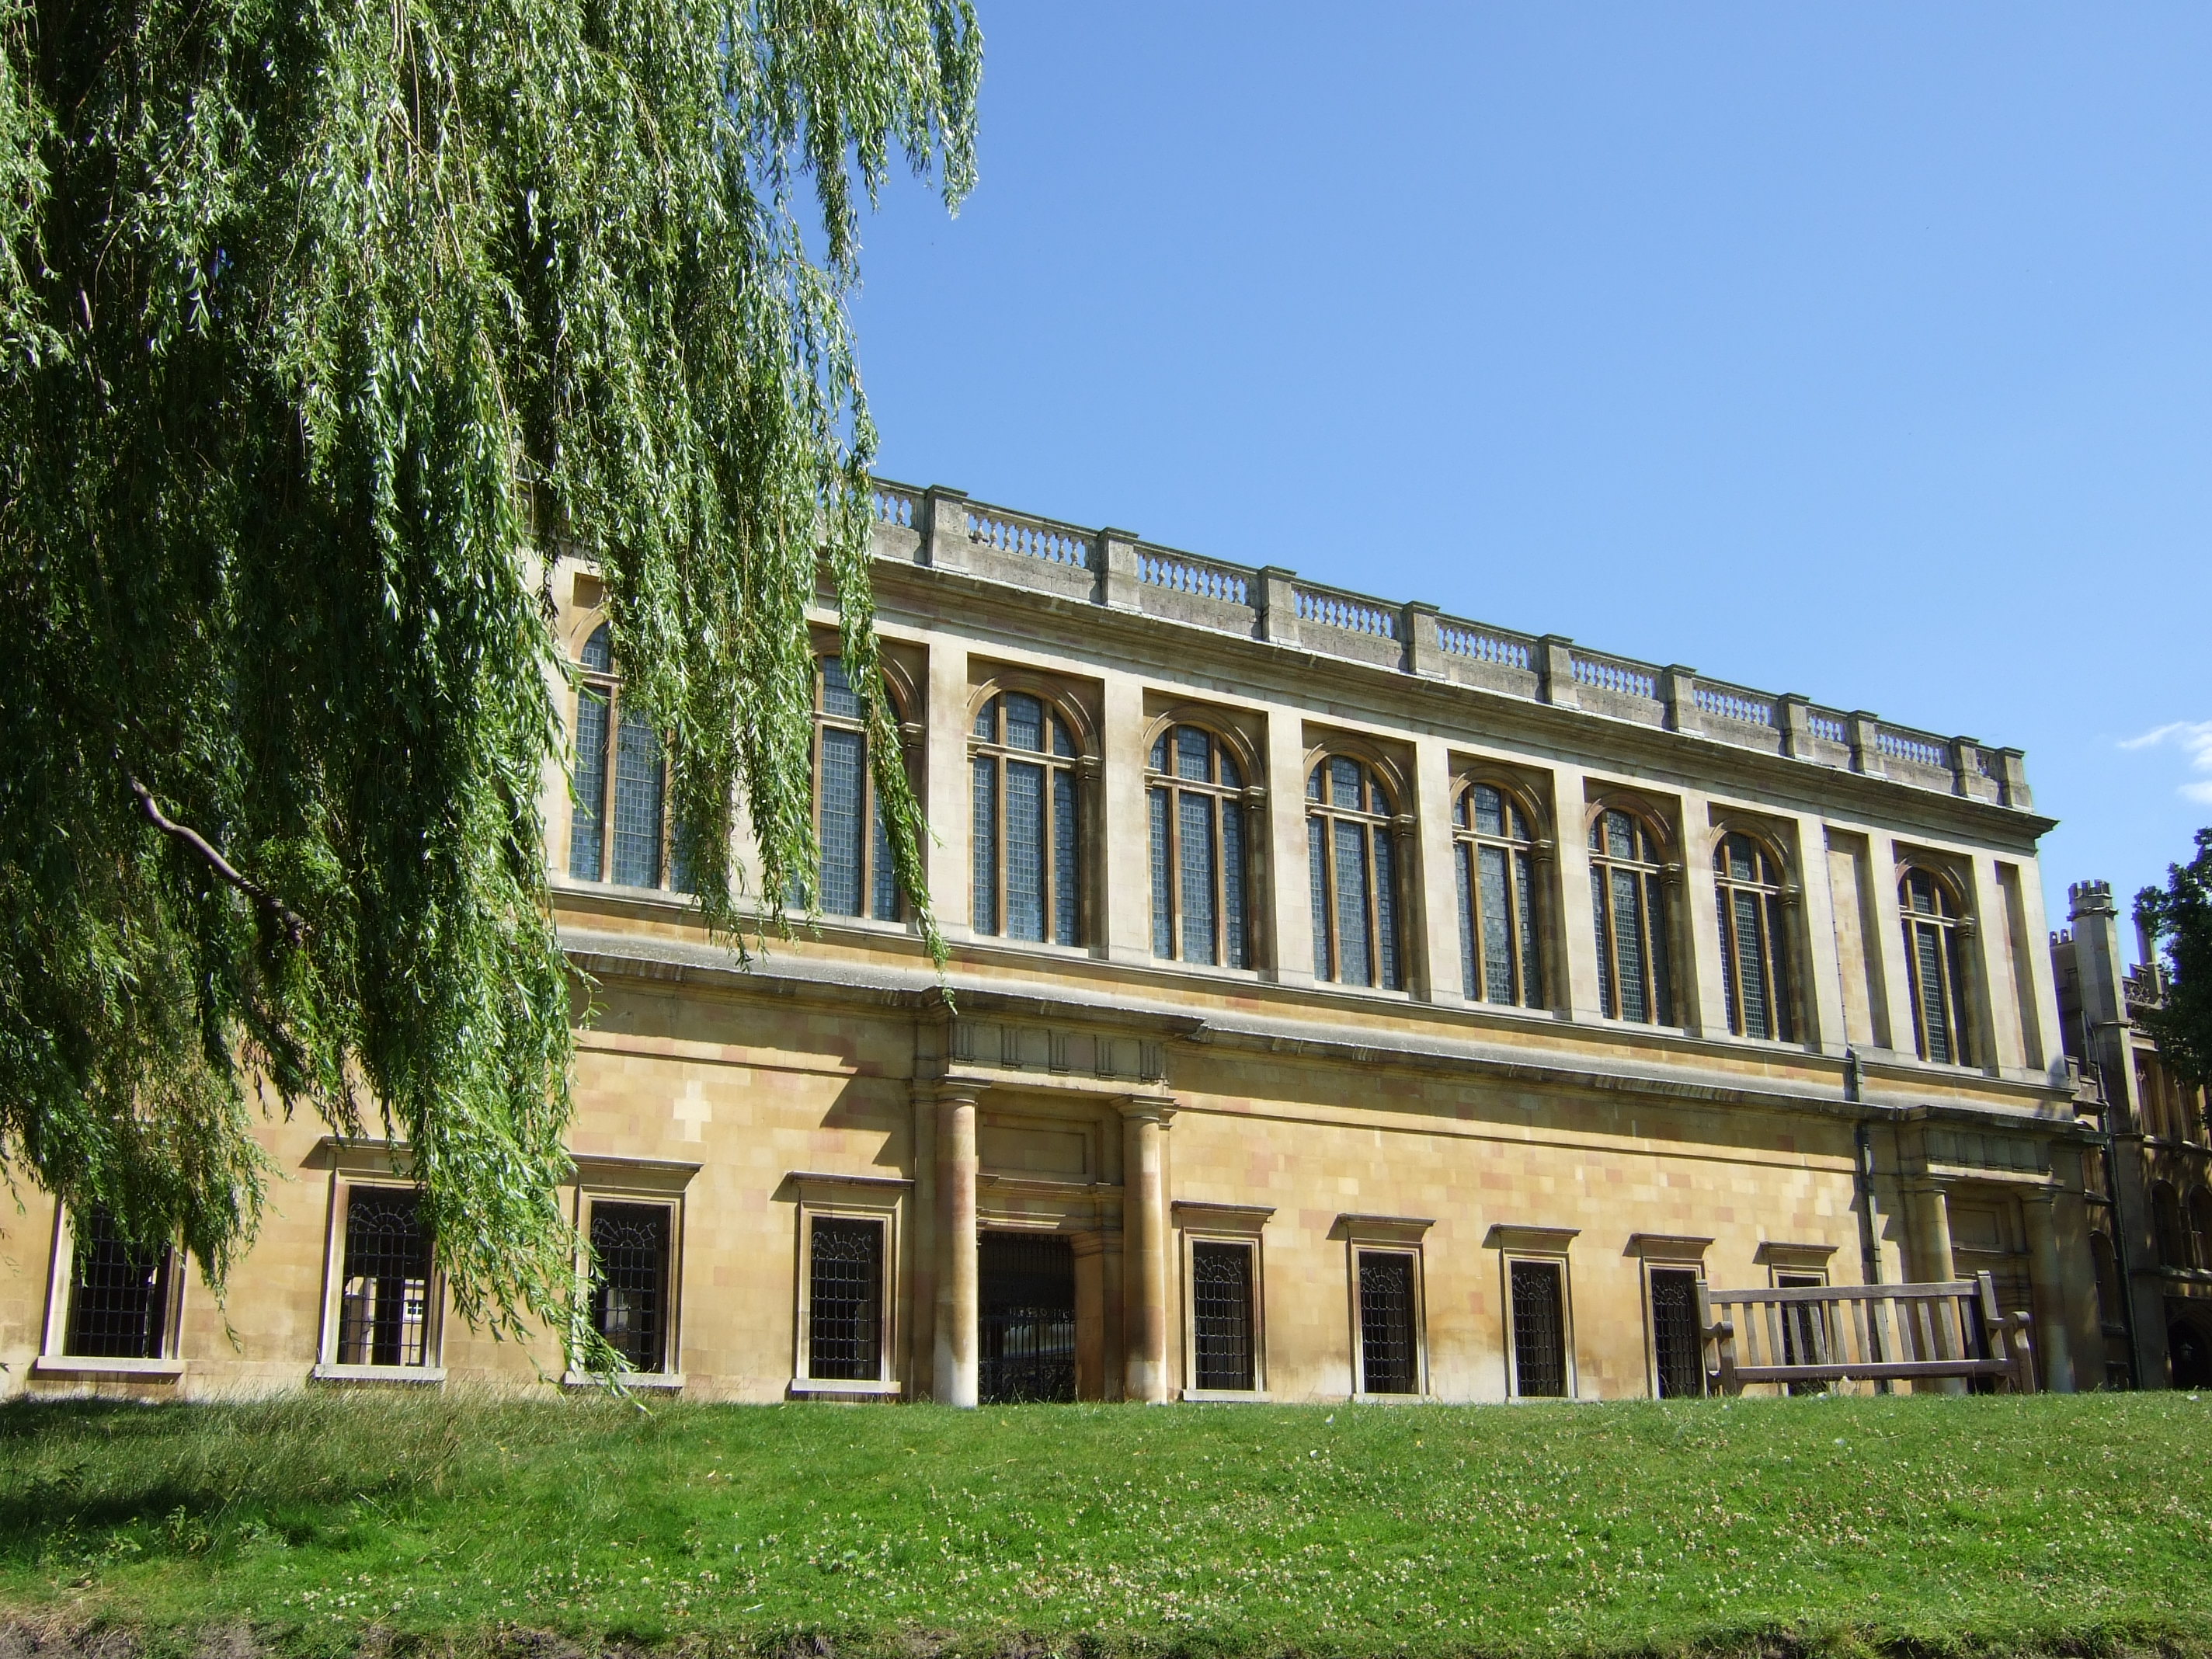 The Wren Library, Trinity College Cambridge